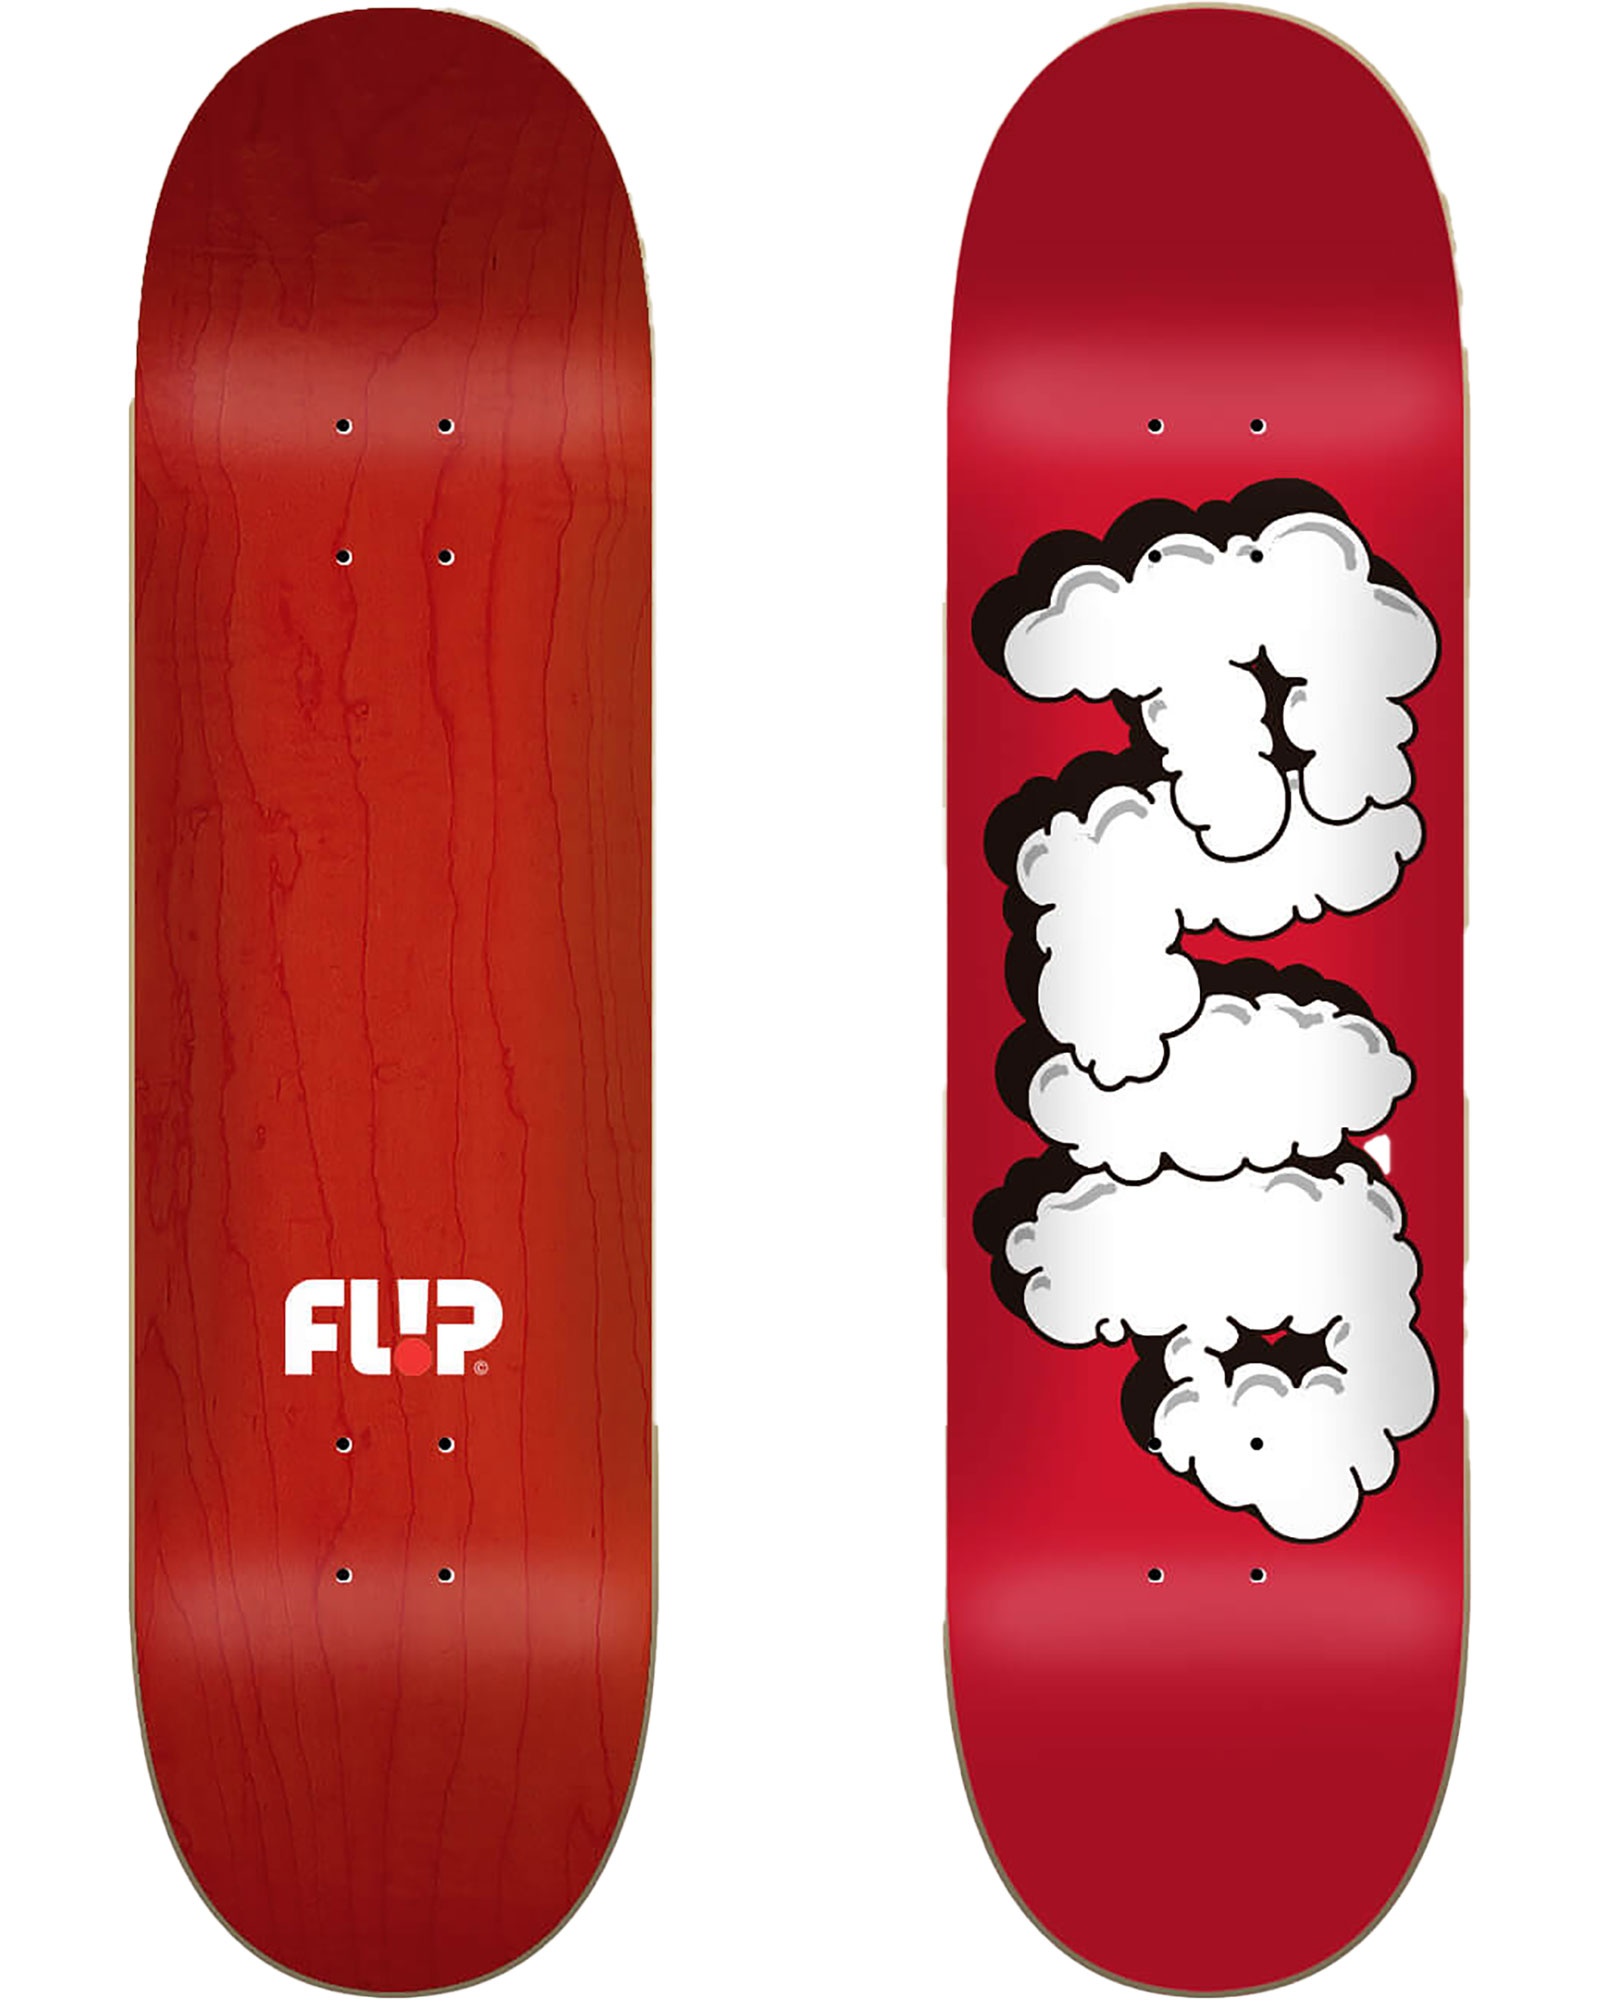 Flip Smokin' Red 8.0"  Skateboard Deck